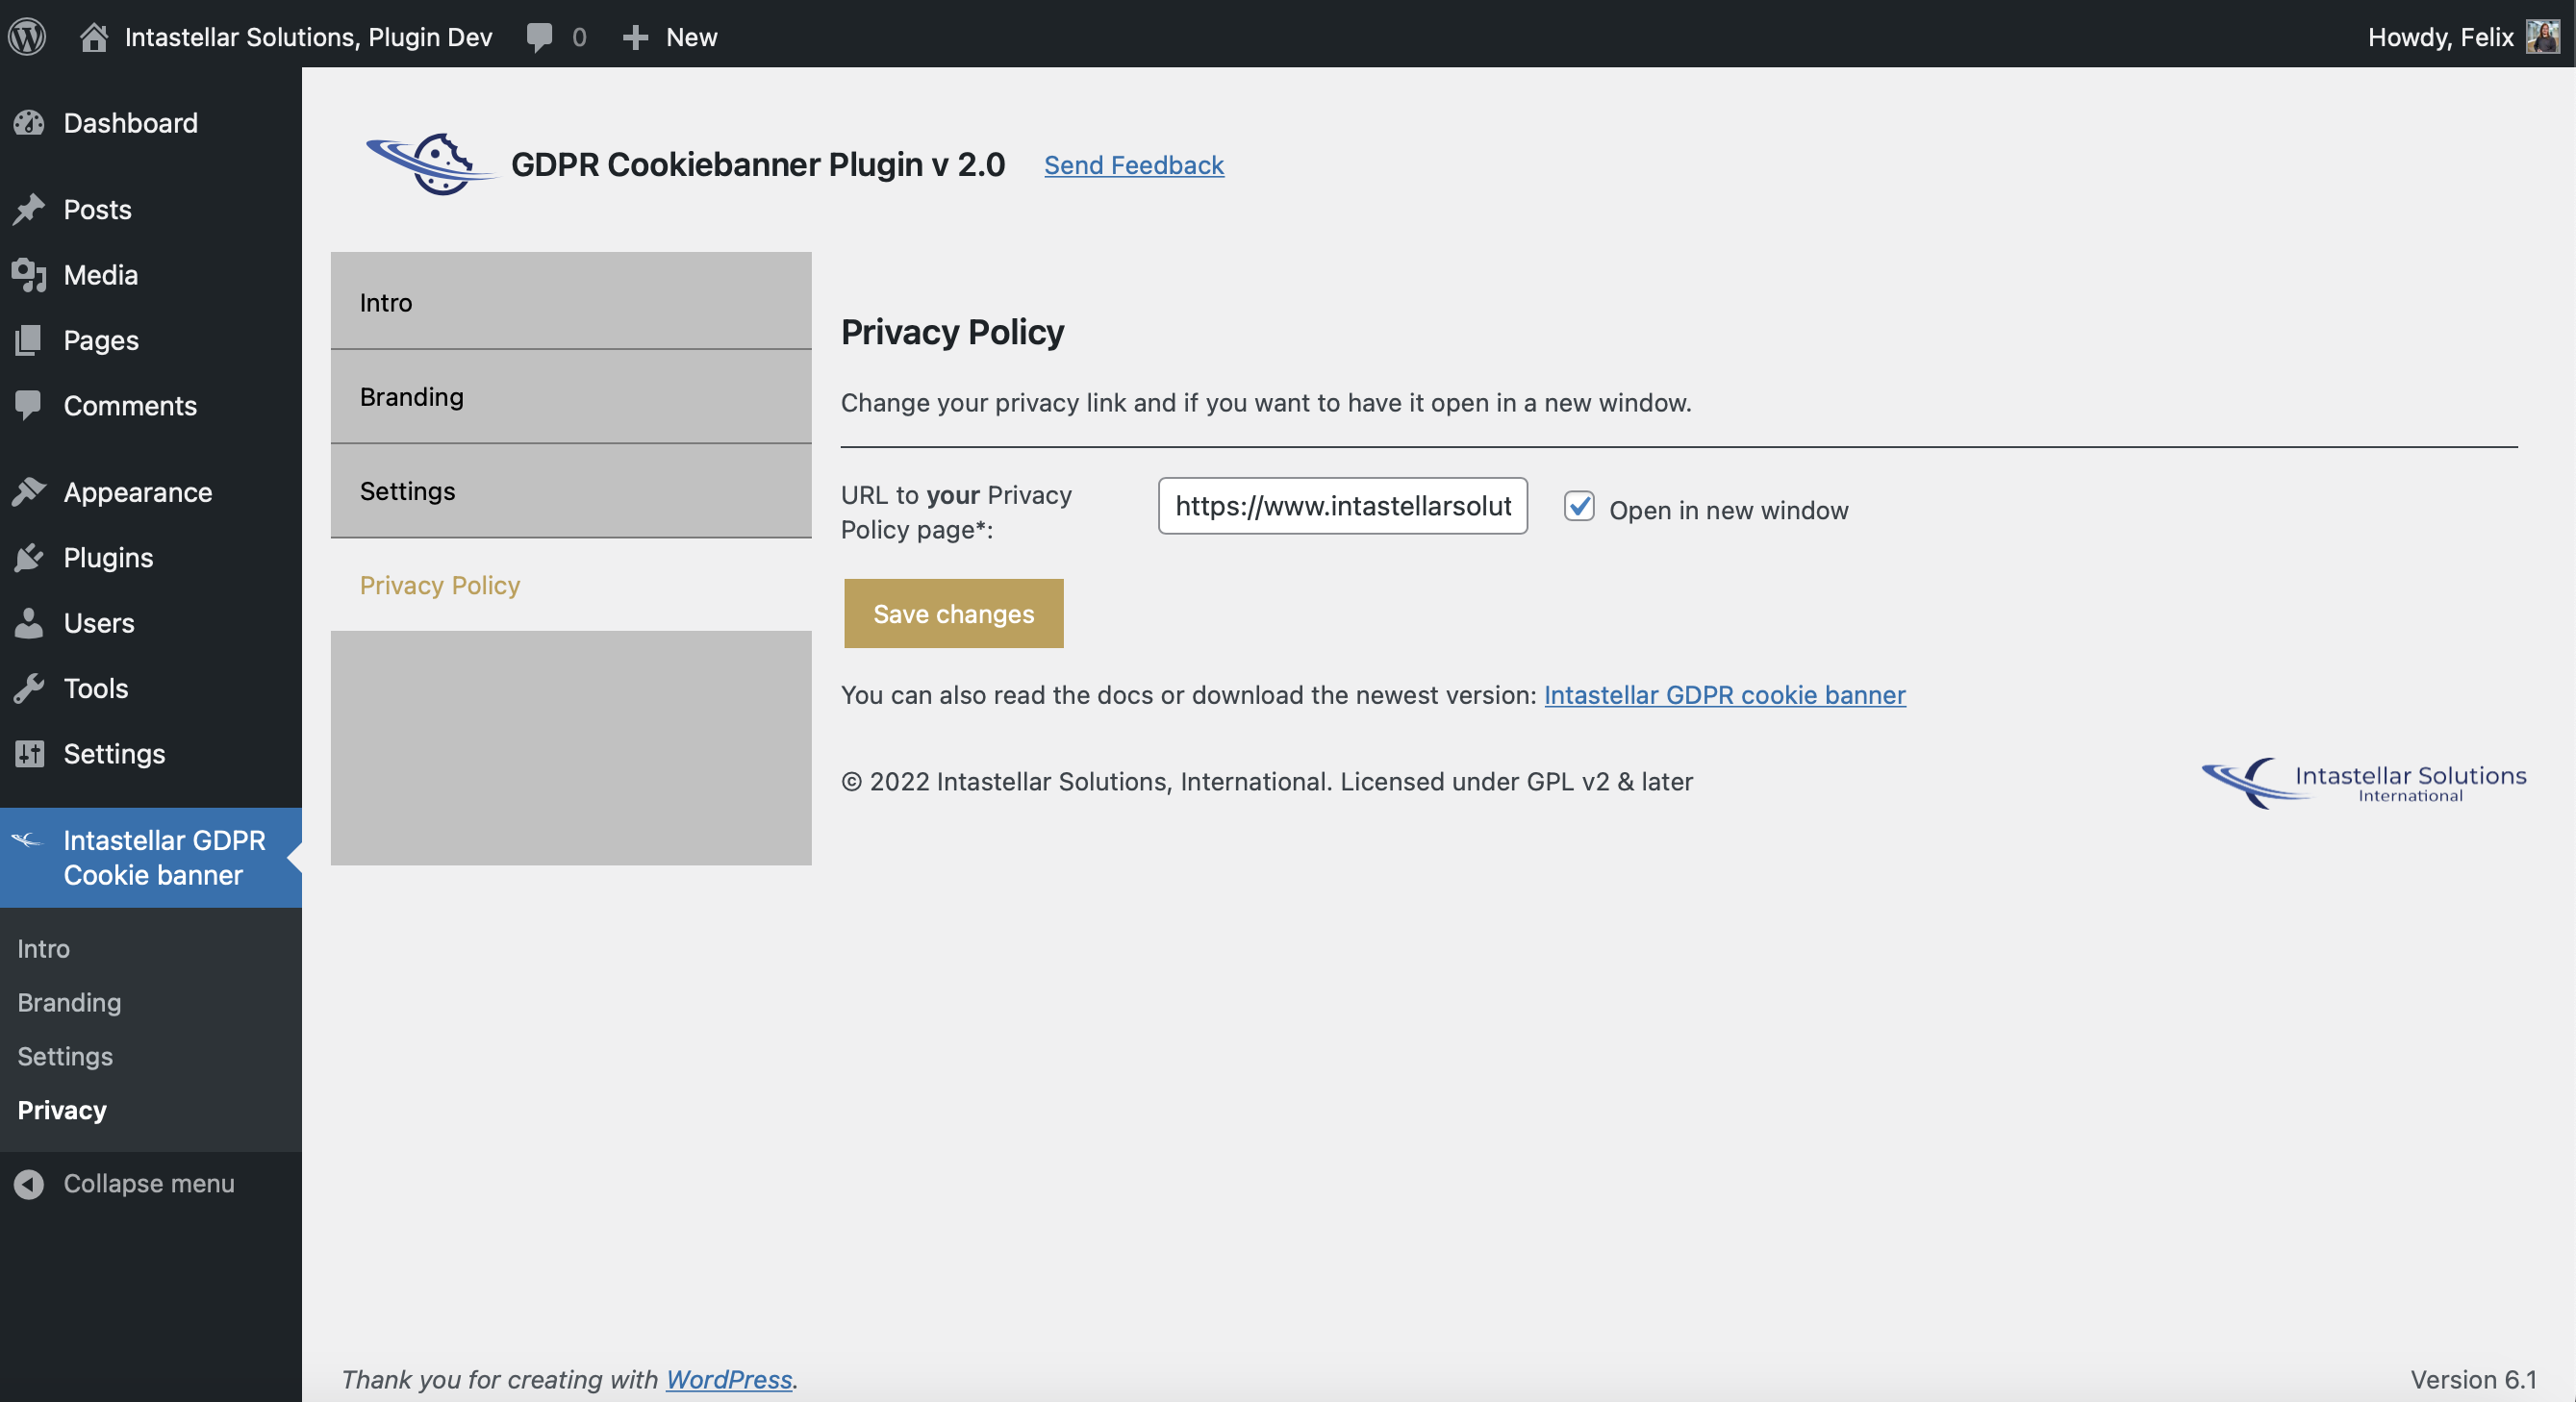 GDPR cookiebanner, Wordpress plugin Dashboard - Privacy